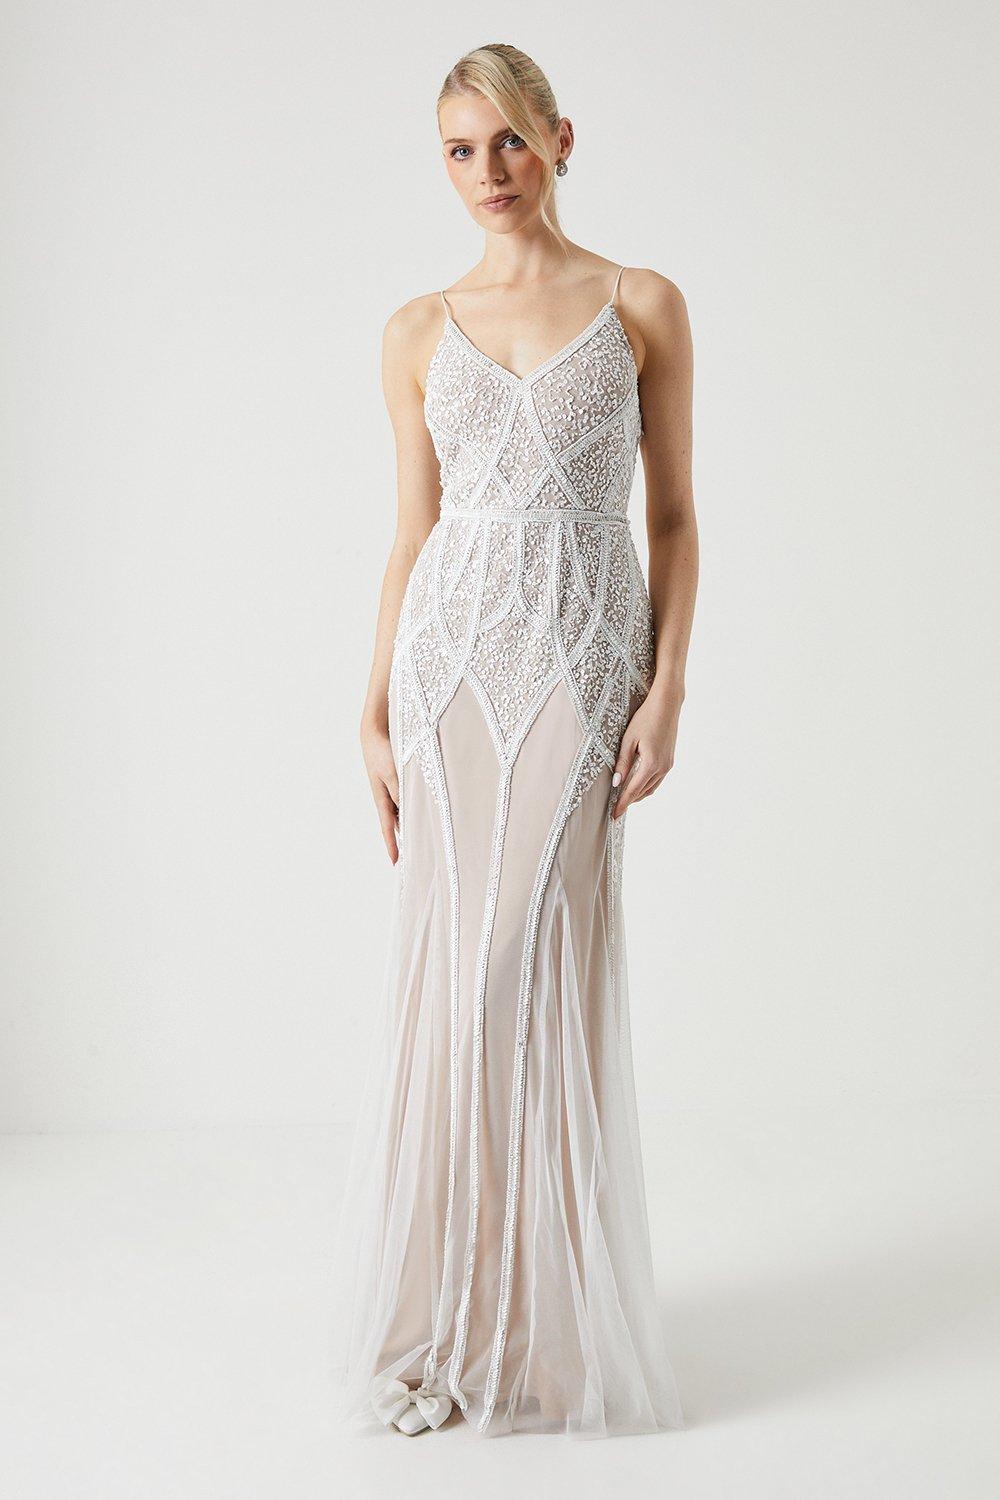 Premium Embroidered And Embellished Fishtail Wedding Dress - Ivory